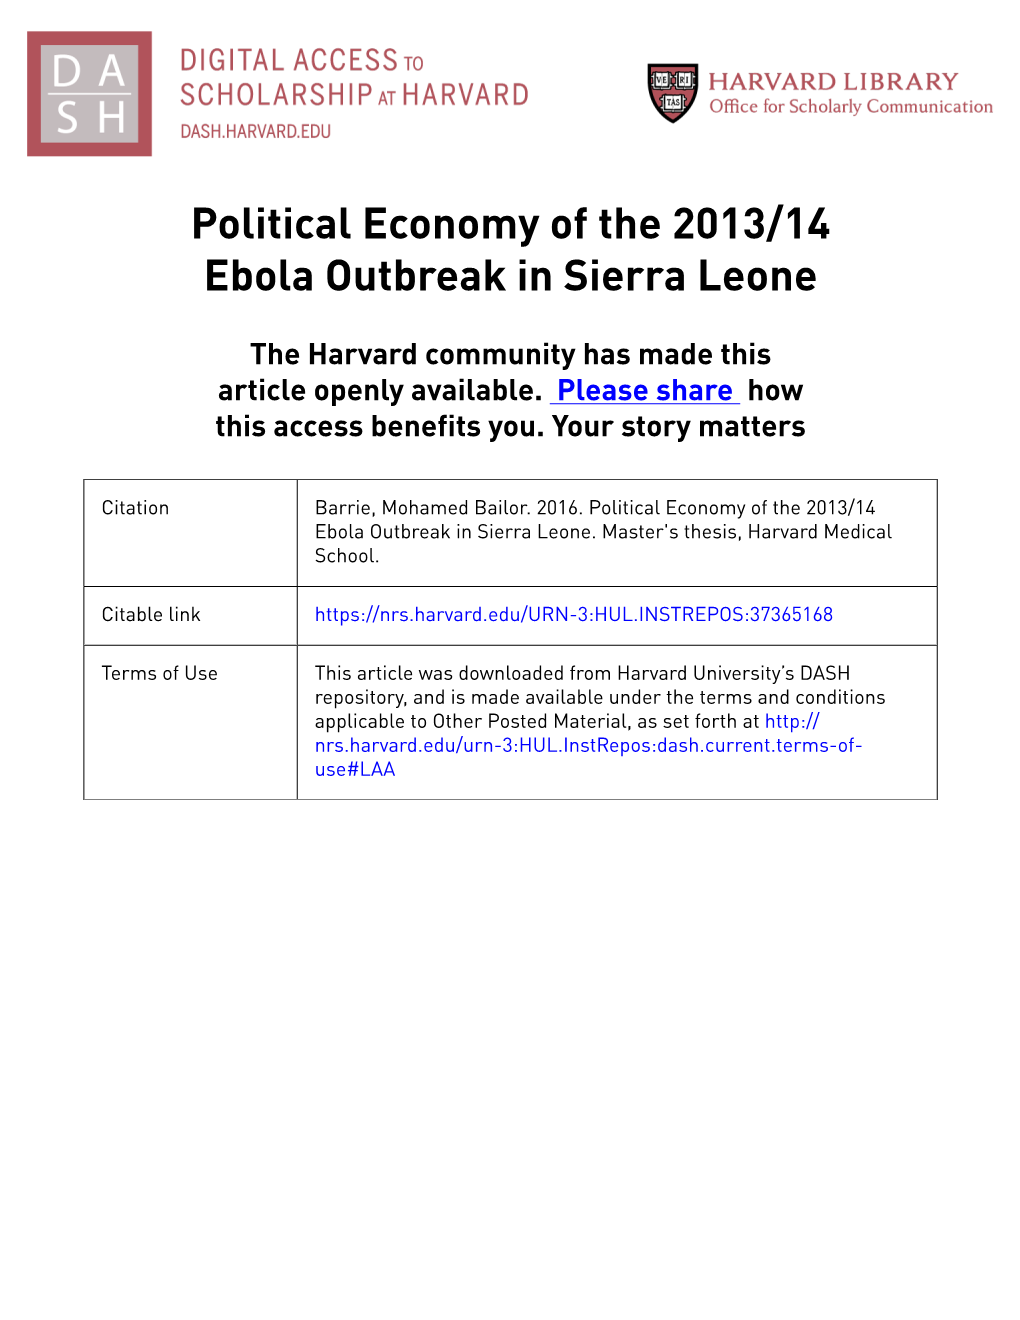 Political Economy of the 2013/14 Ebola Outbreak in Sierra Leone